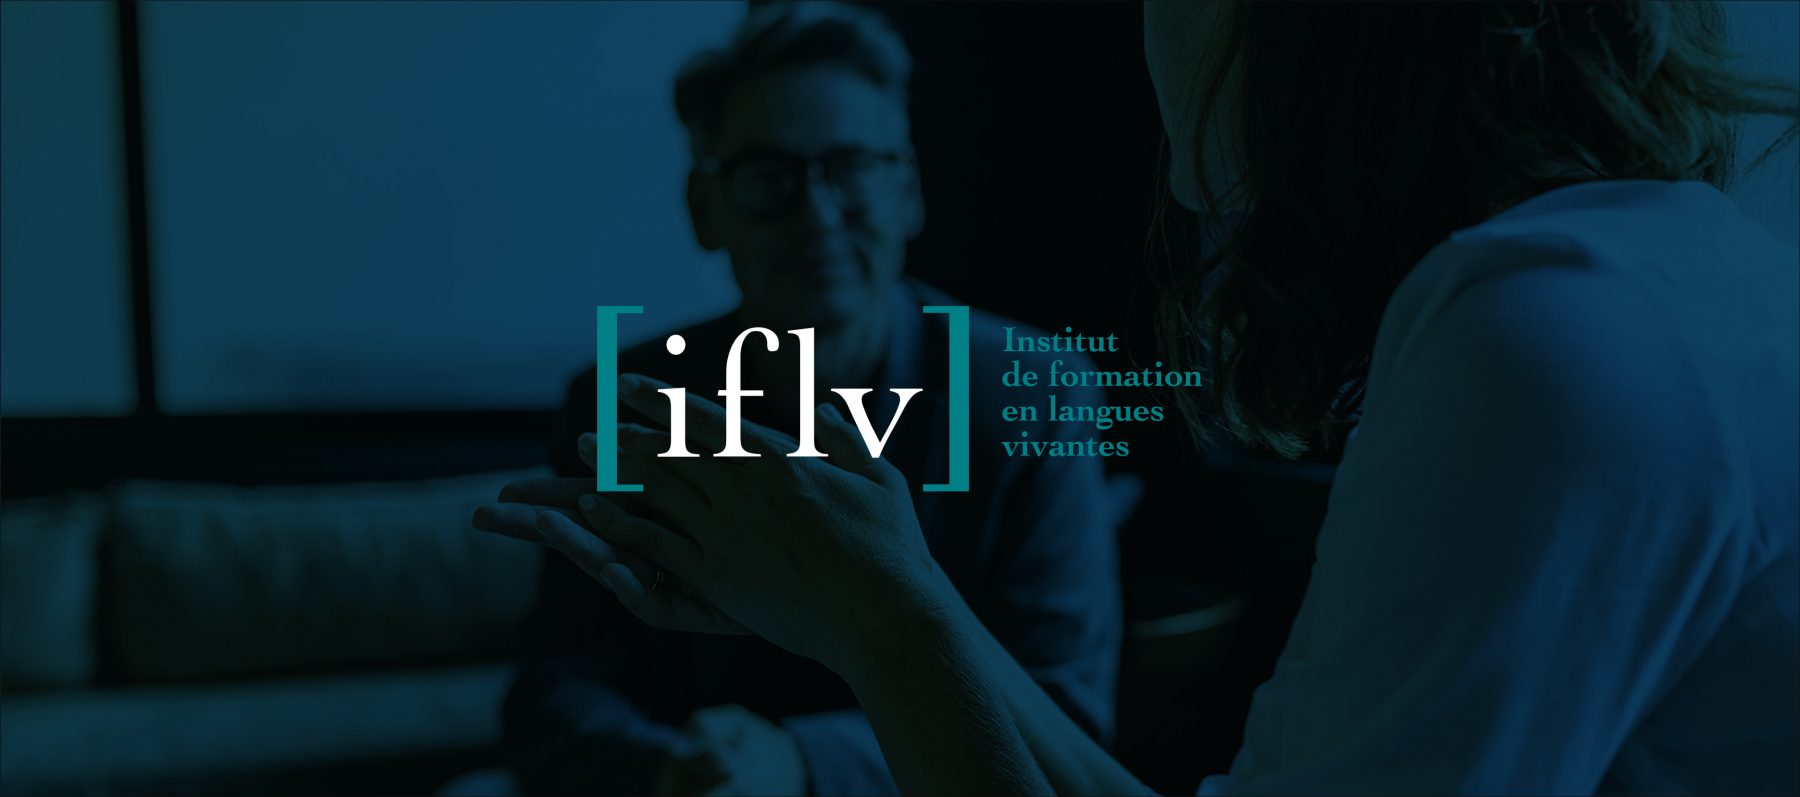 logo IFLV institut de formations en langues vivantes